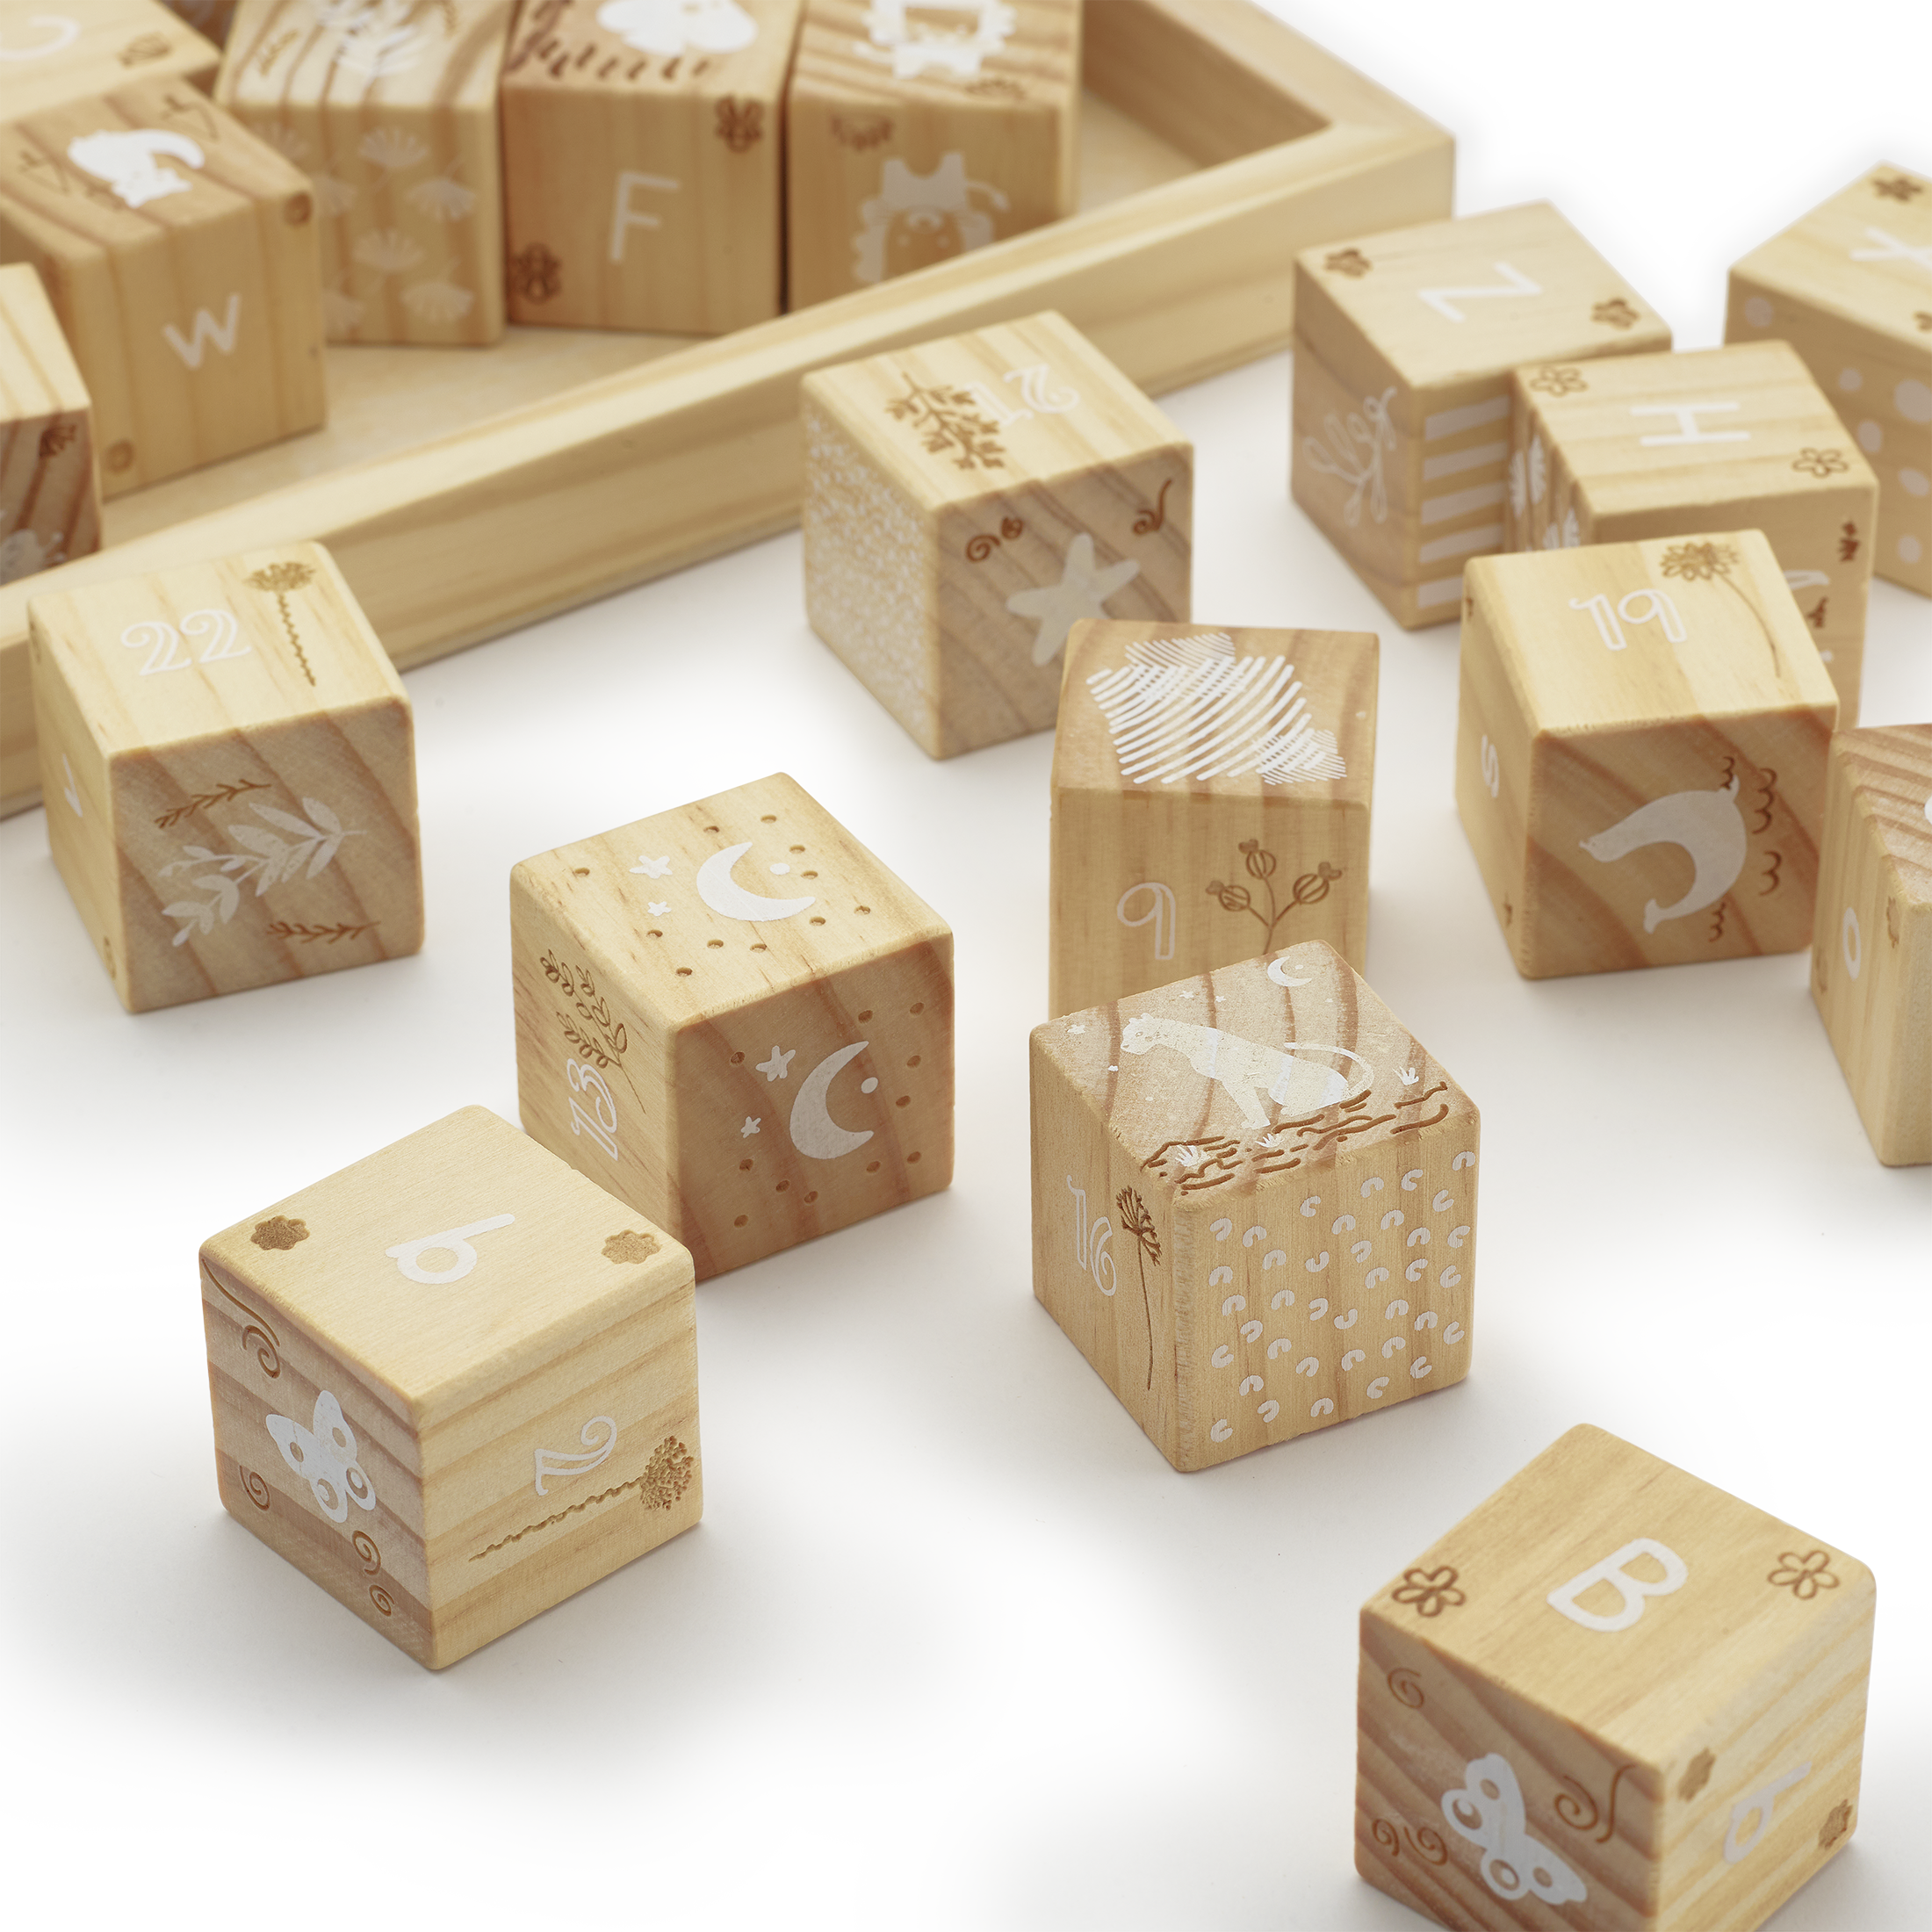 Wooden art blocks